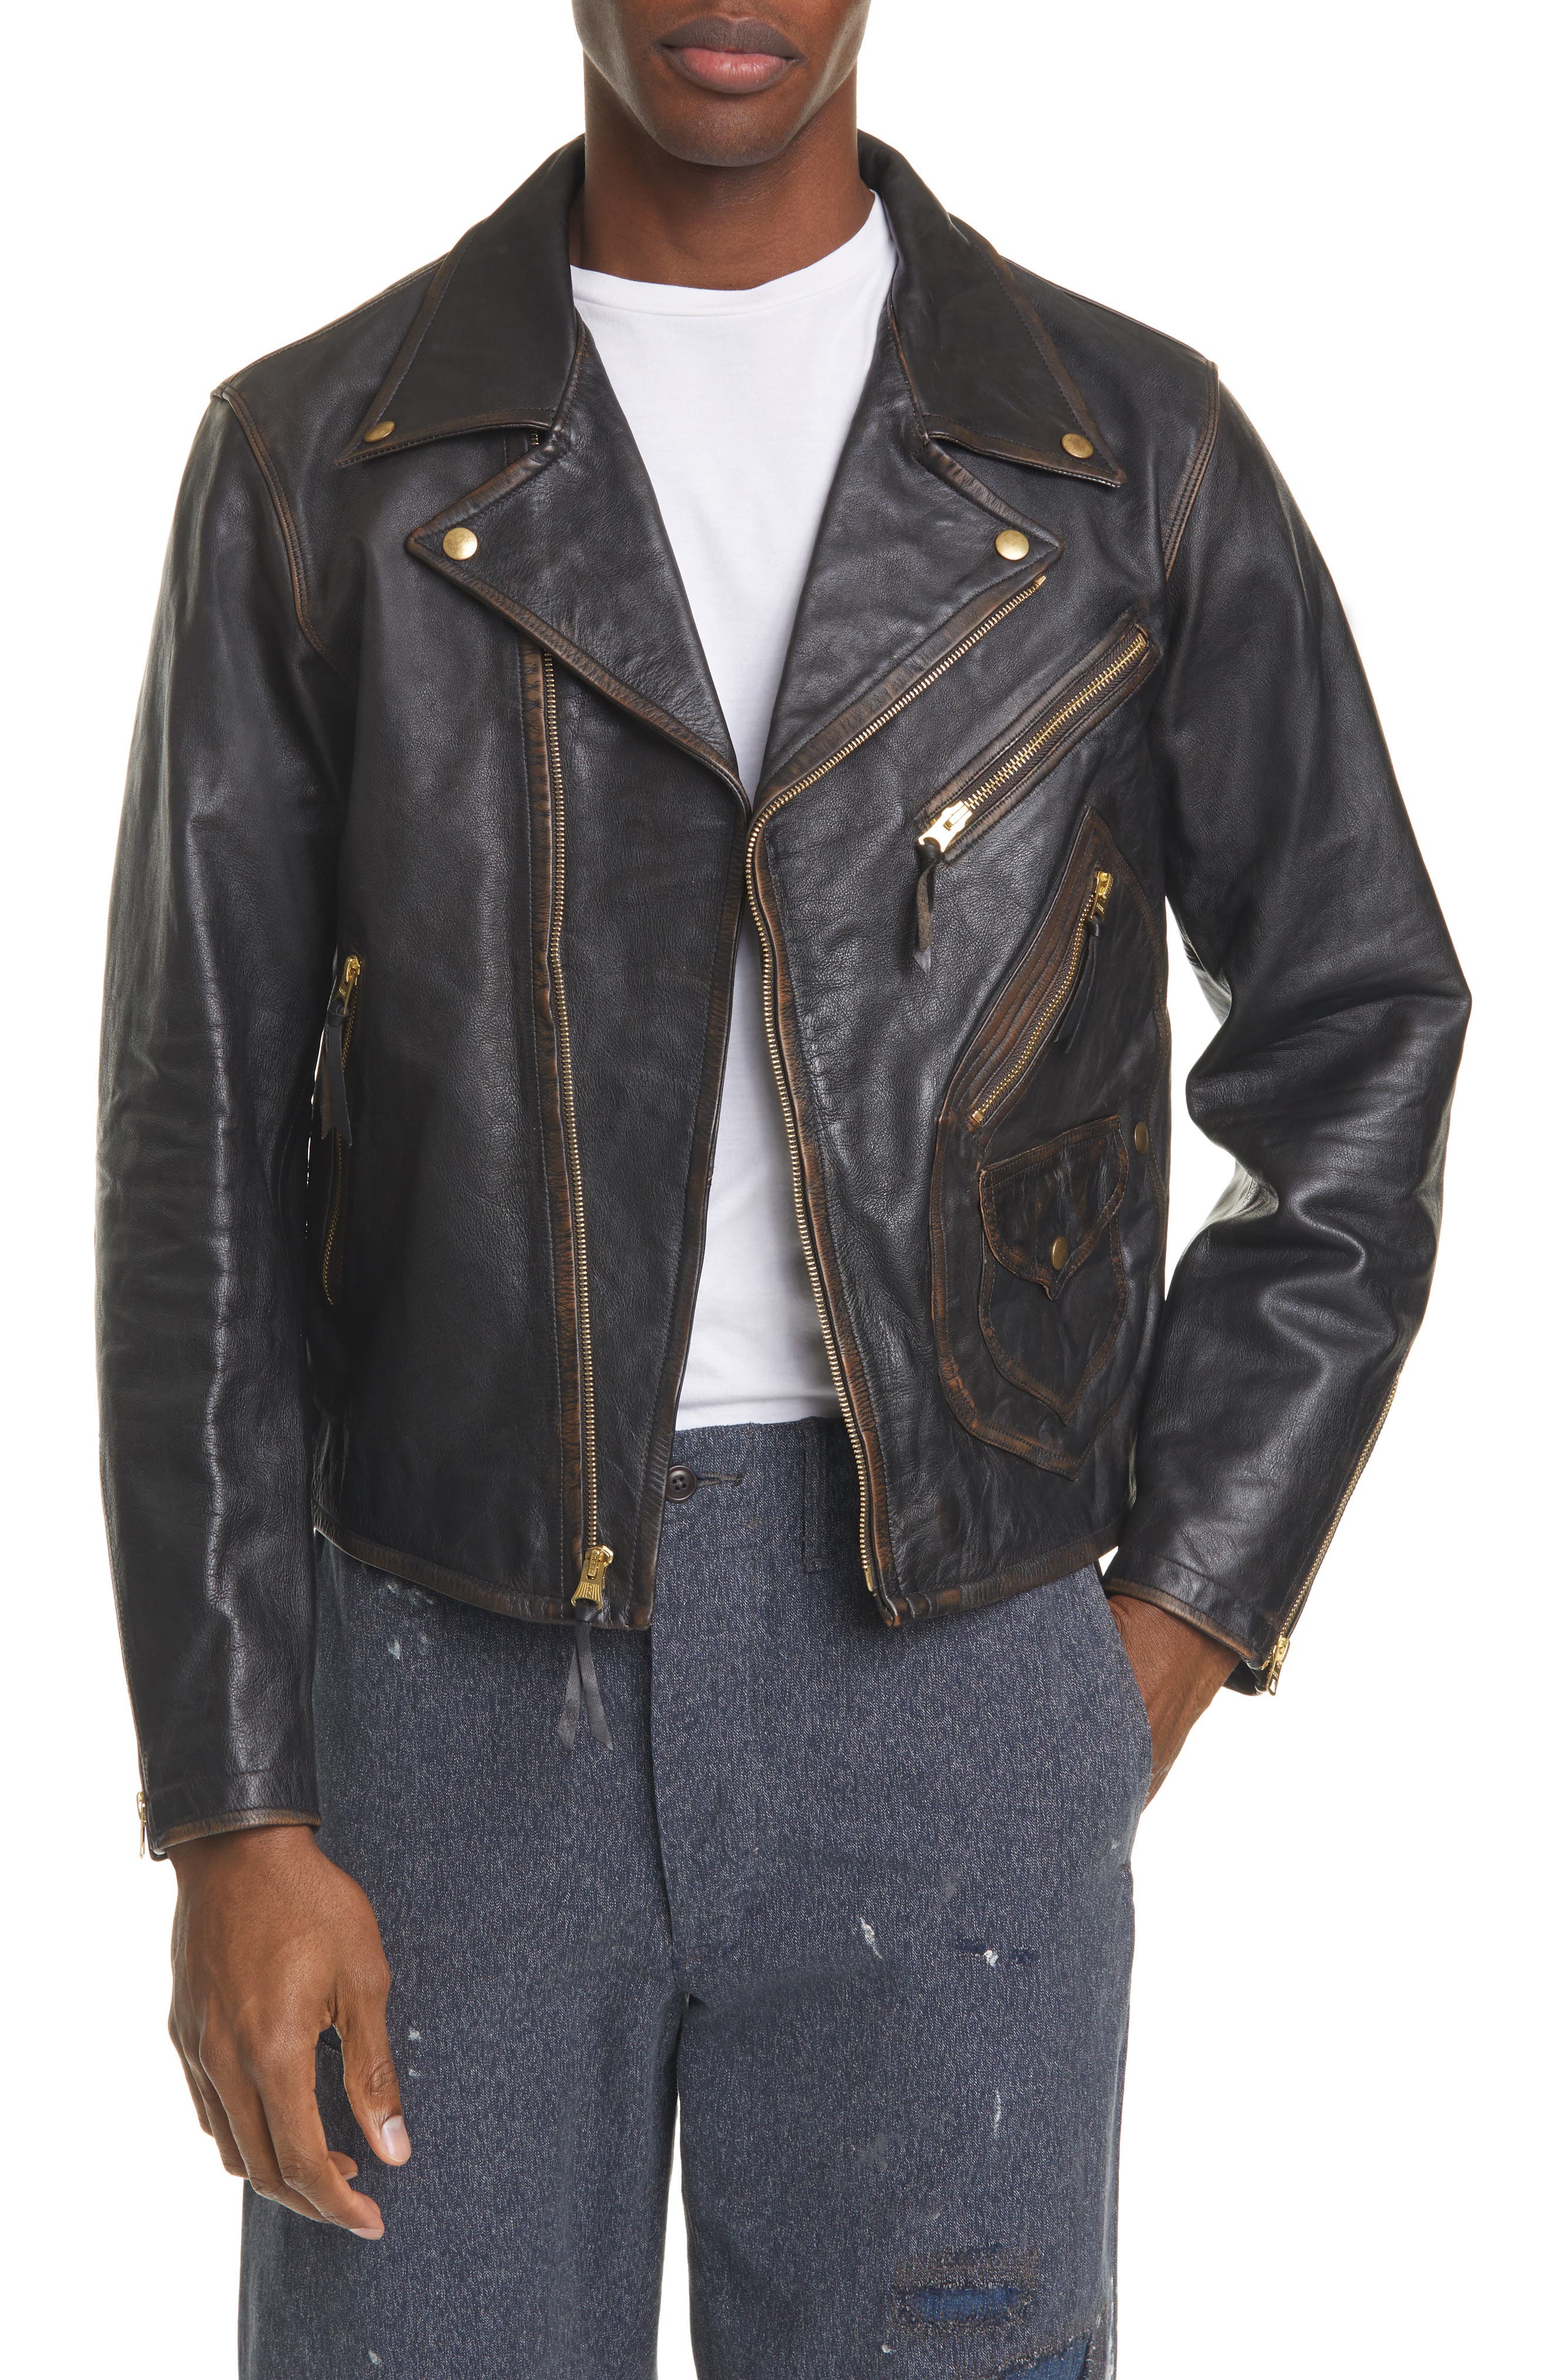 rrl slim fit leather jacket